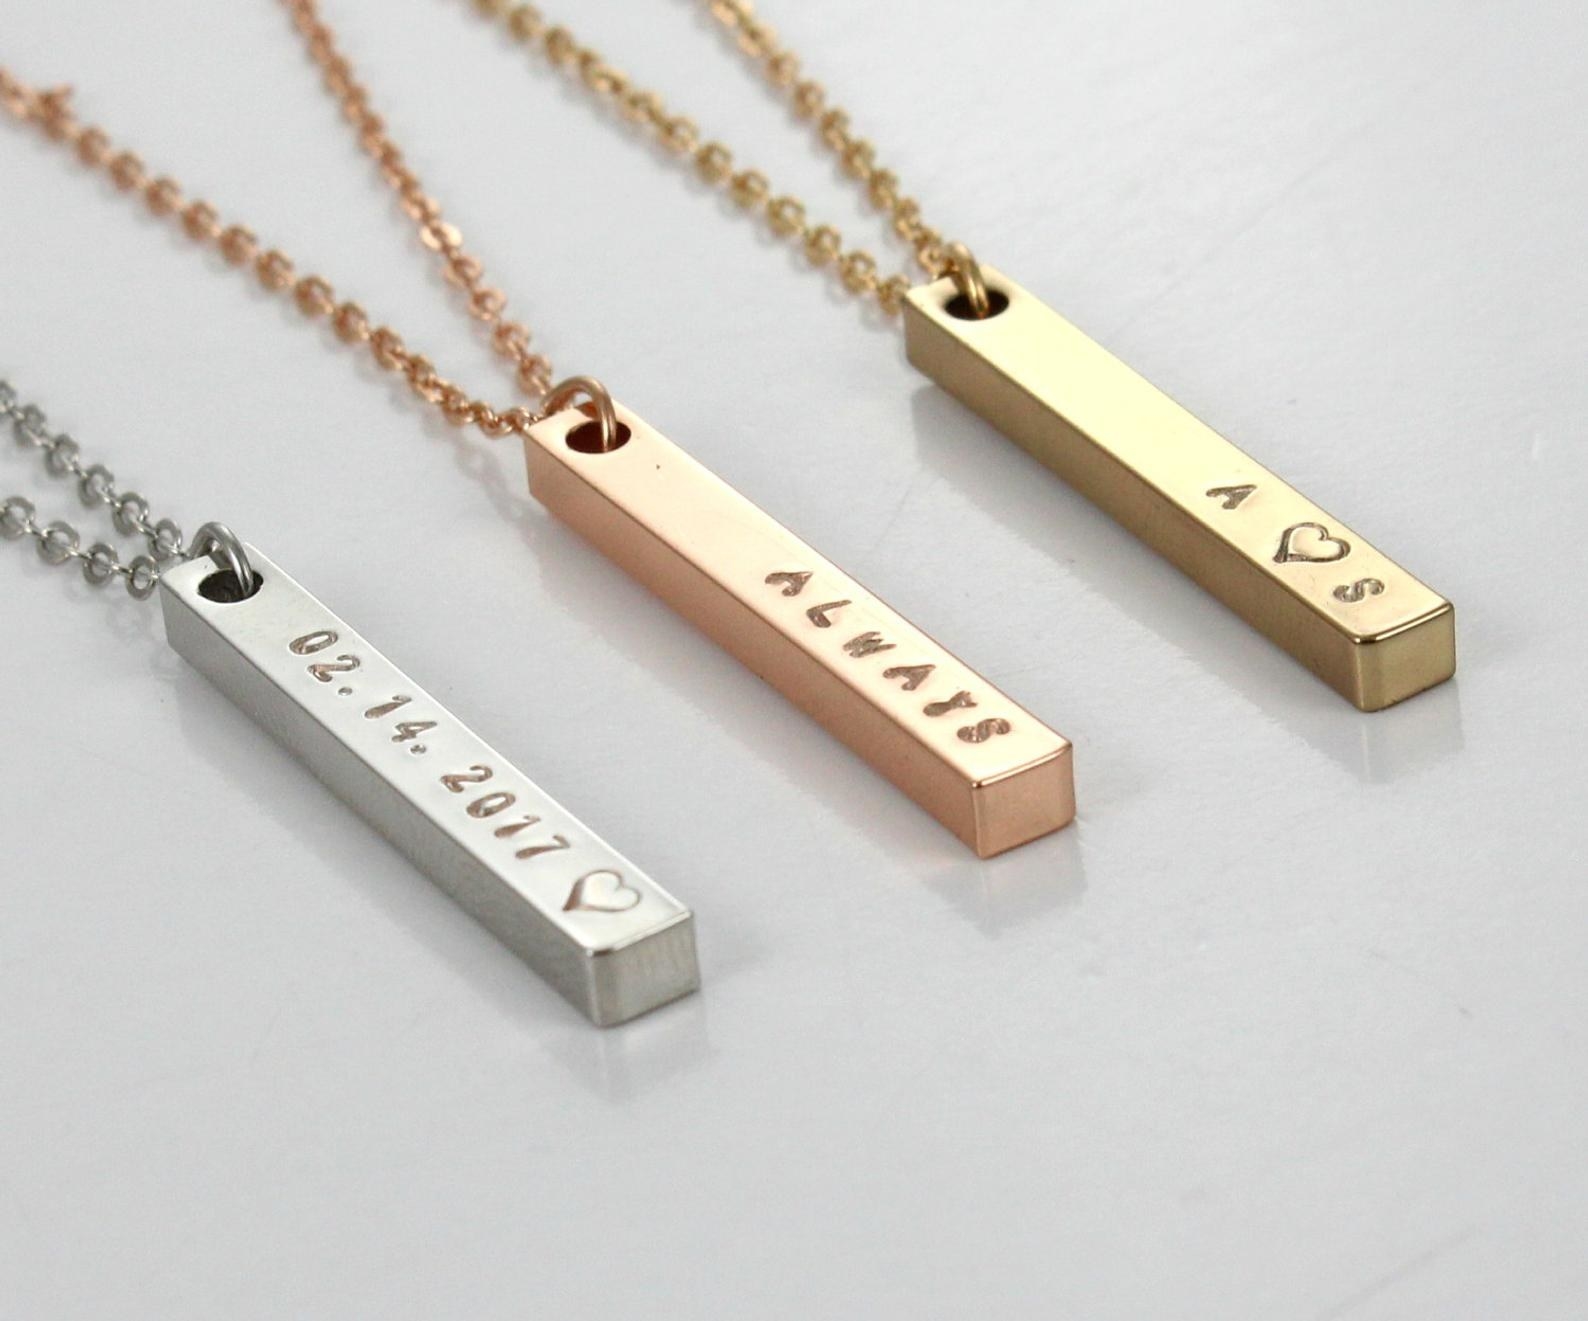 A silver necklace that says &quot;02.14.2017,&quot; a copper necklace that says &quot;ALWAYS,&quot; and a gold necklace that says &quot;A heart S&quot;